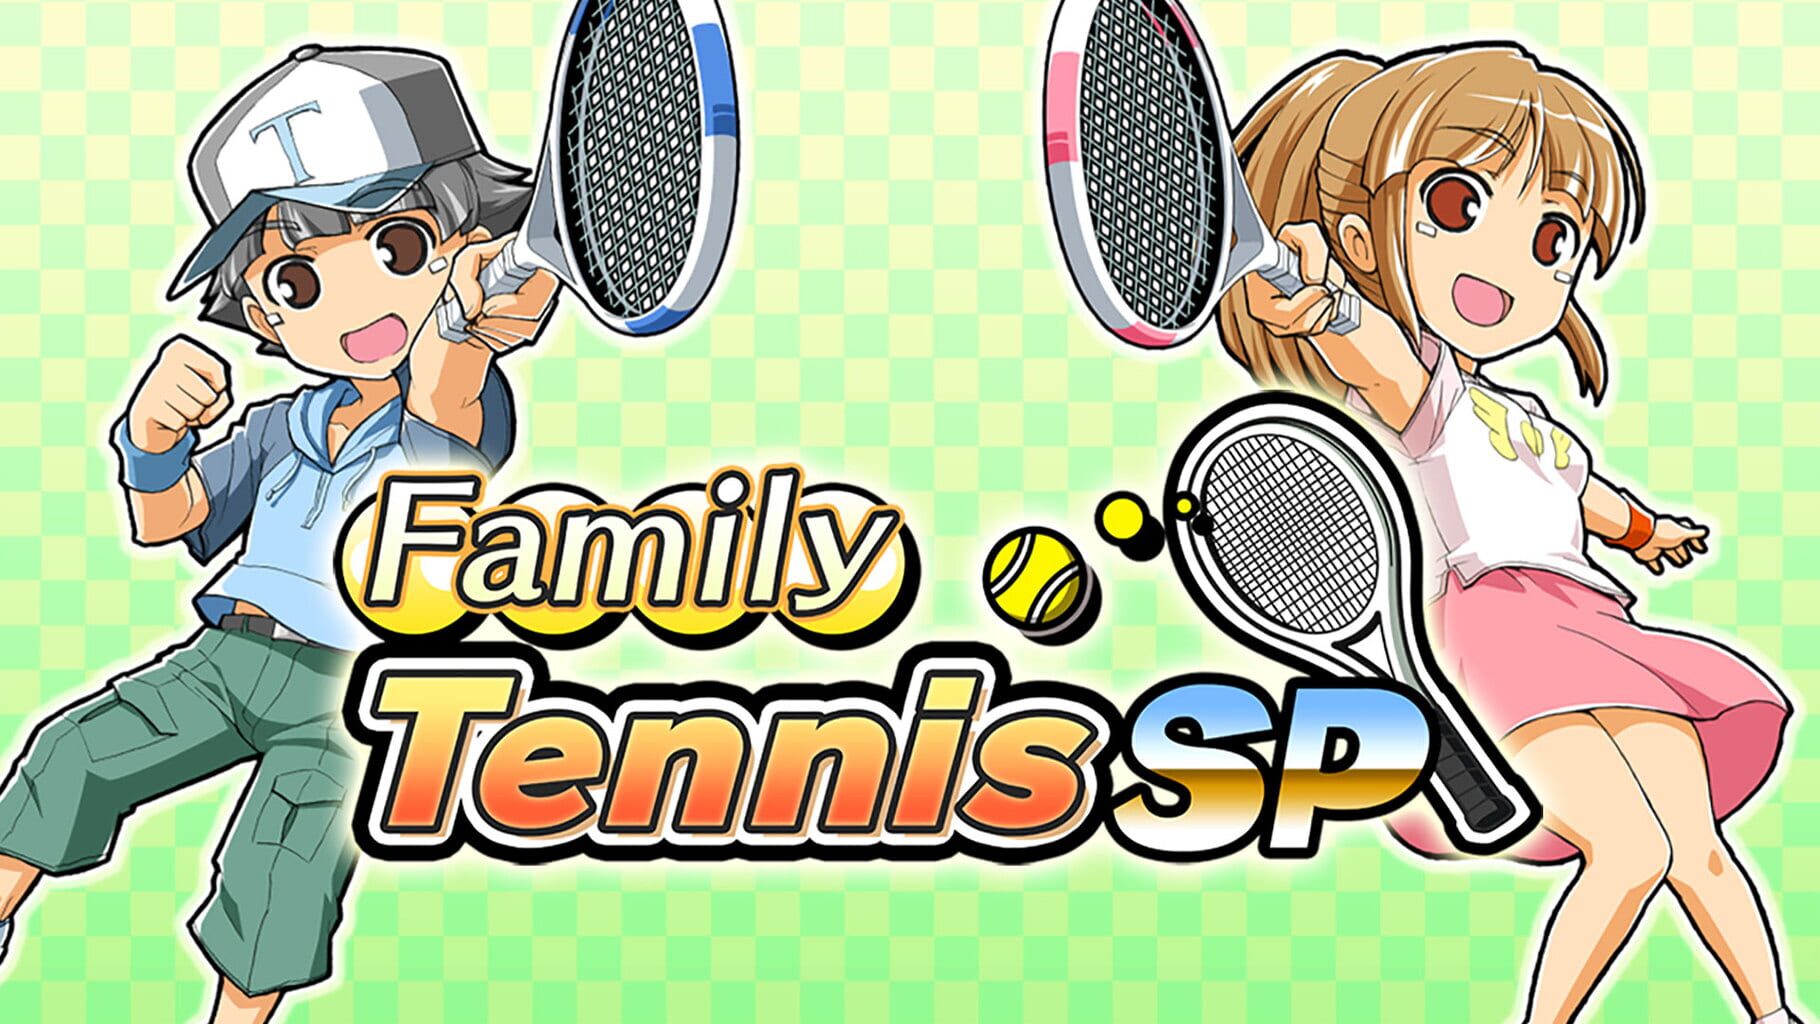 Family Tennis SP artwork